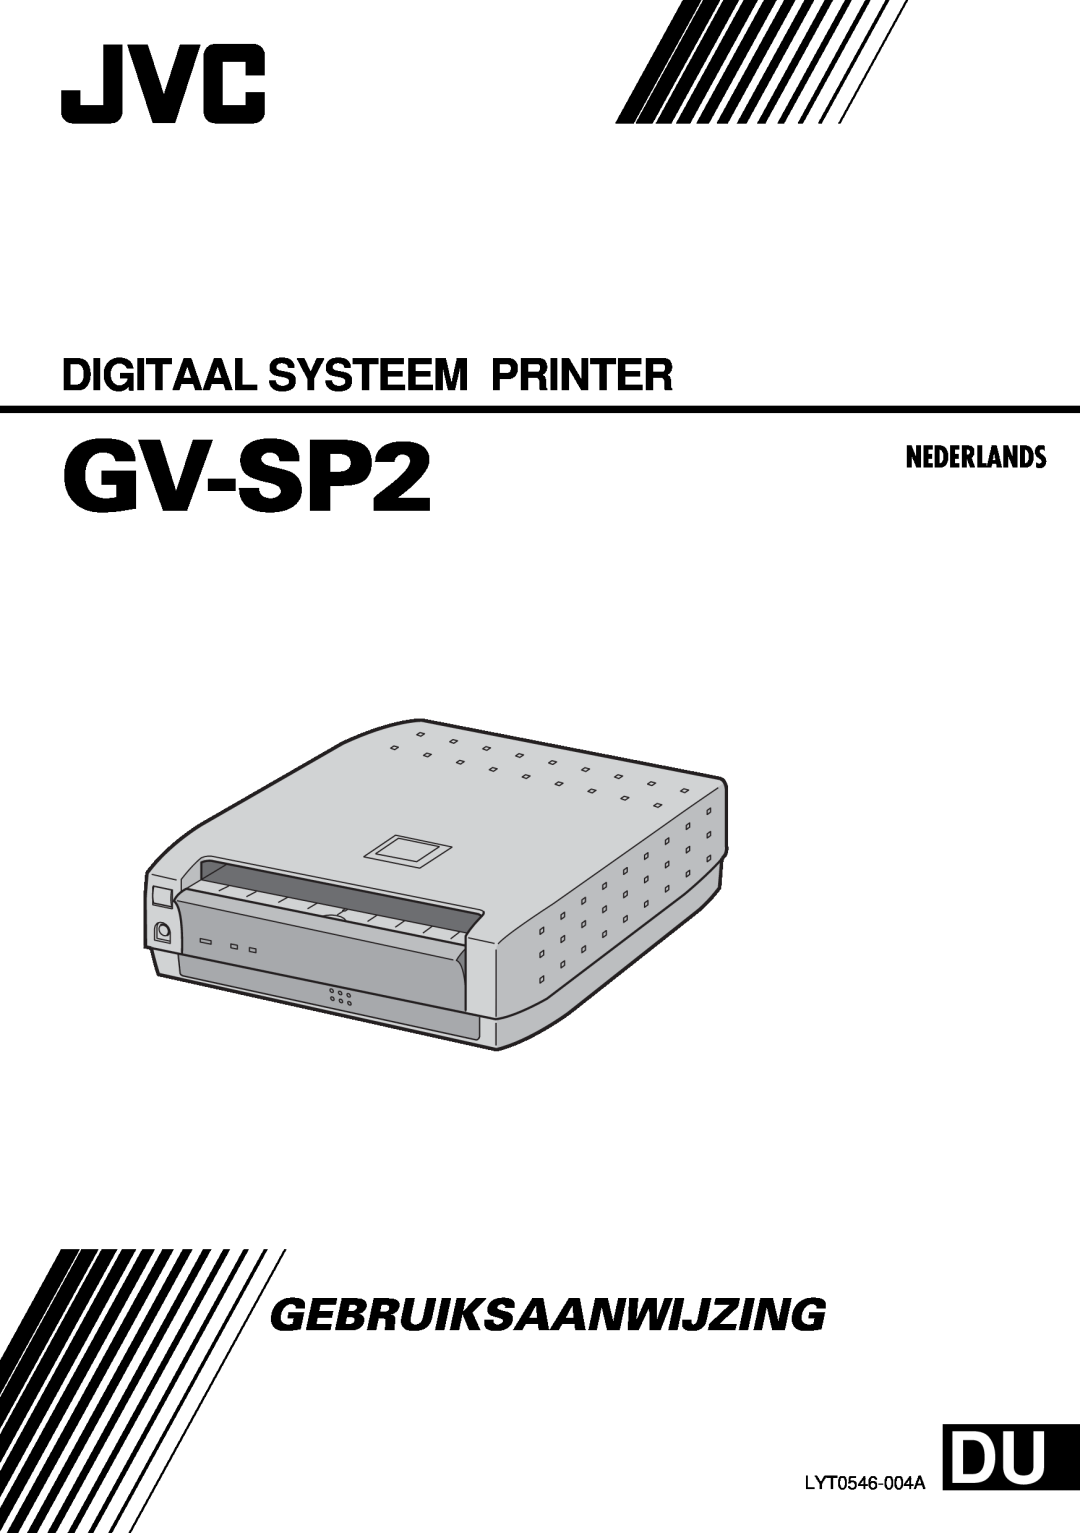 JVC GV-SP2 manual Digitaal Systeem Printer, Gebruiksaanwijzing, Nederlands, LYT0546-004A DU 